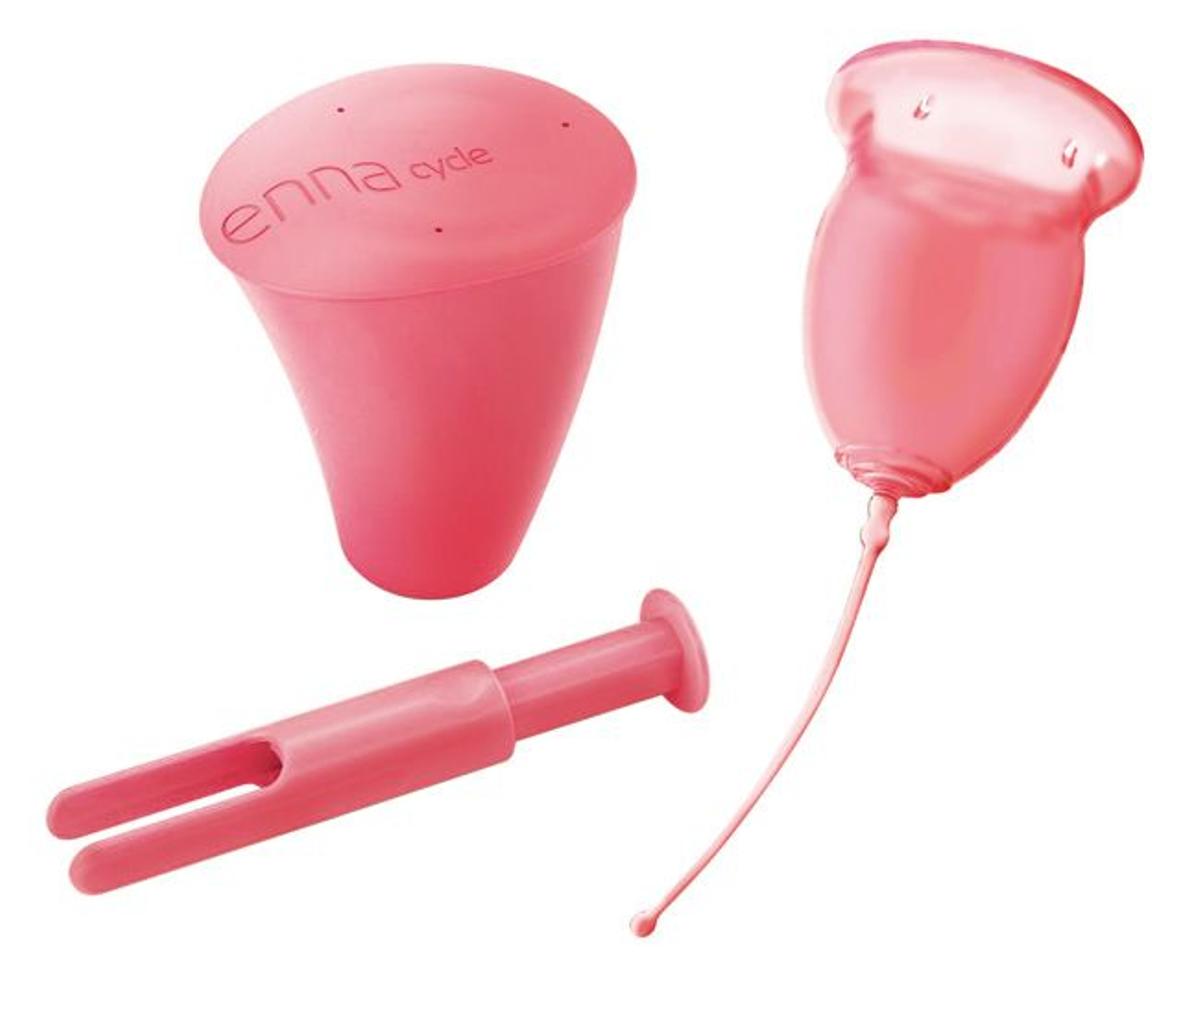 Copa menstrual con adaptador, Enna Cycle